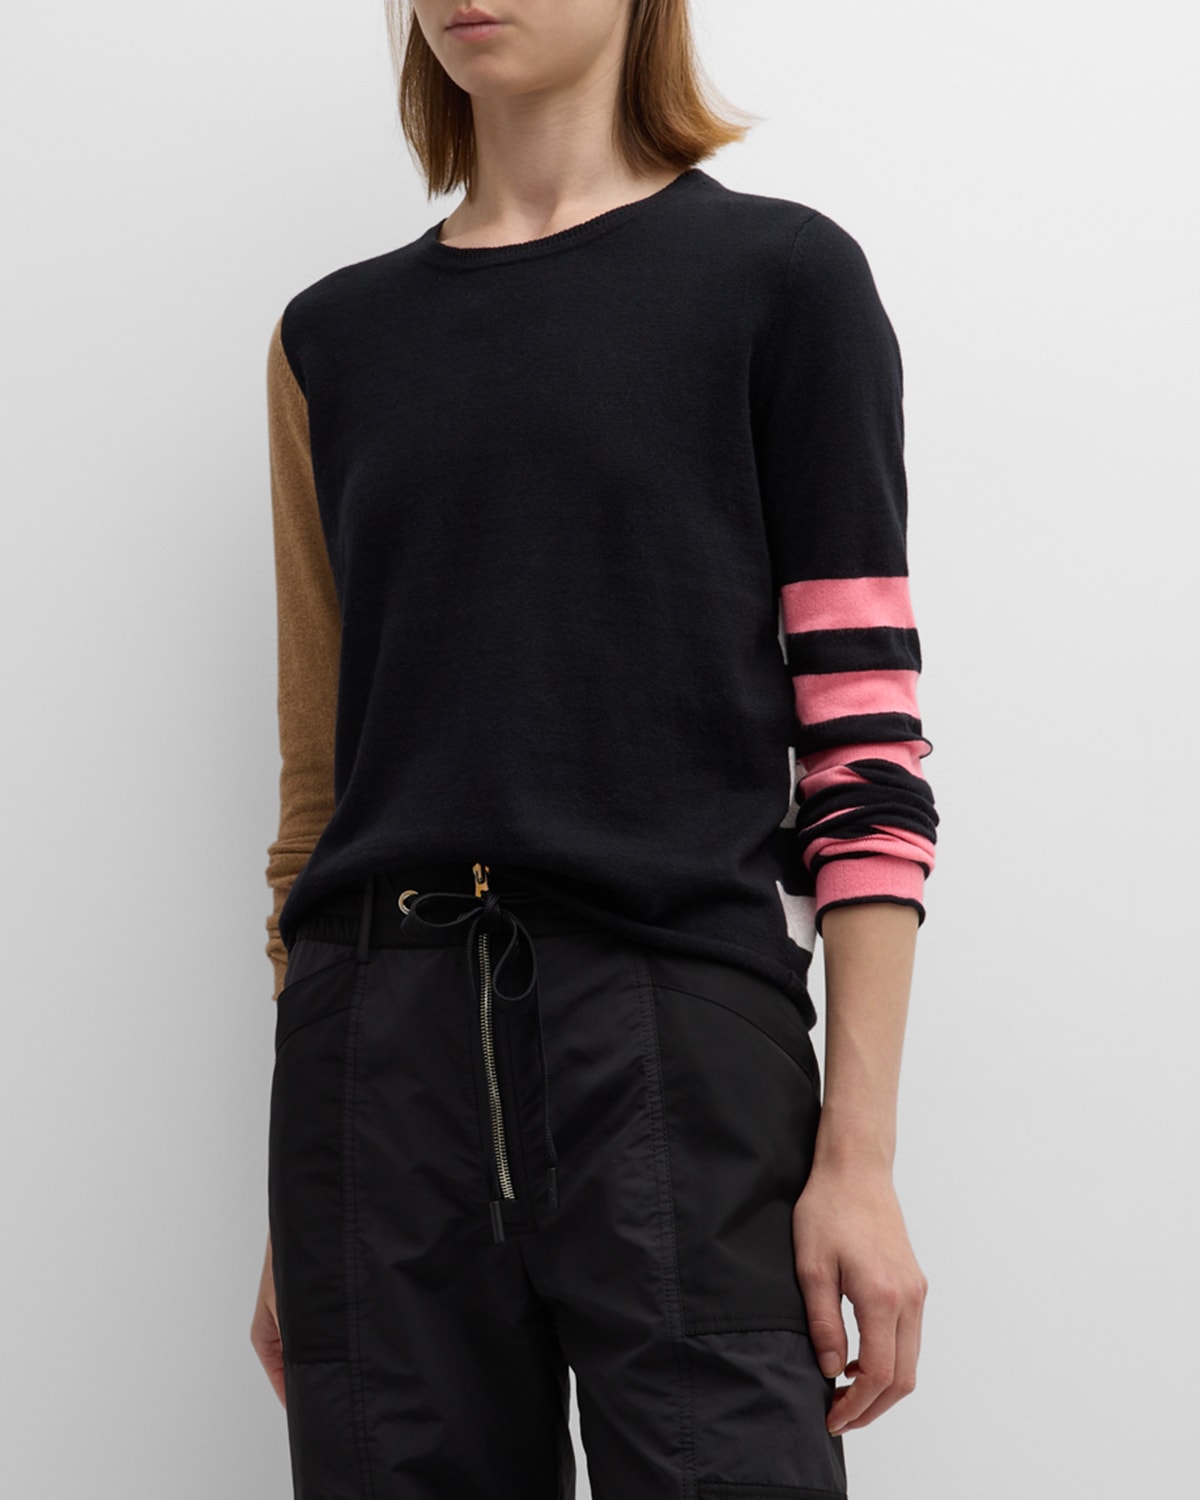 Lisa Todd Pop Rox Colorblock Striped Sweater In Black